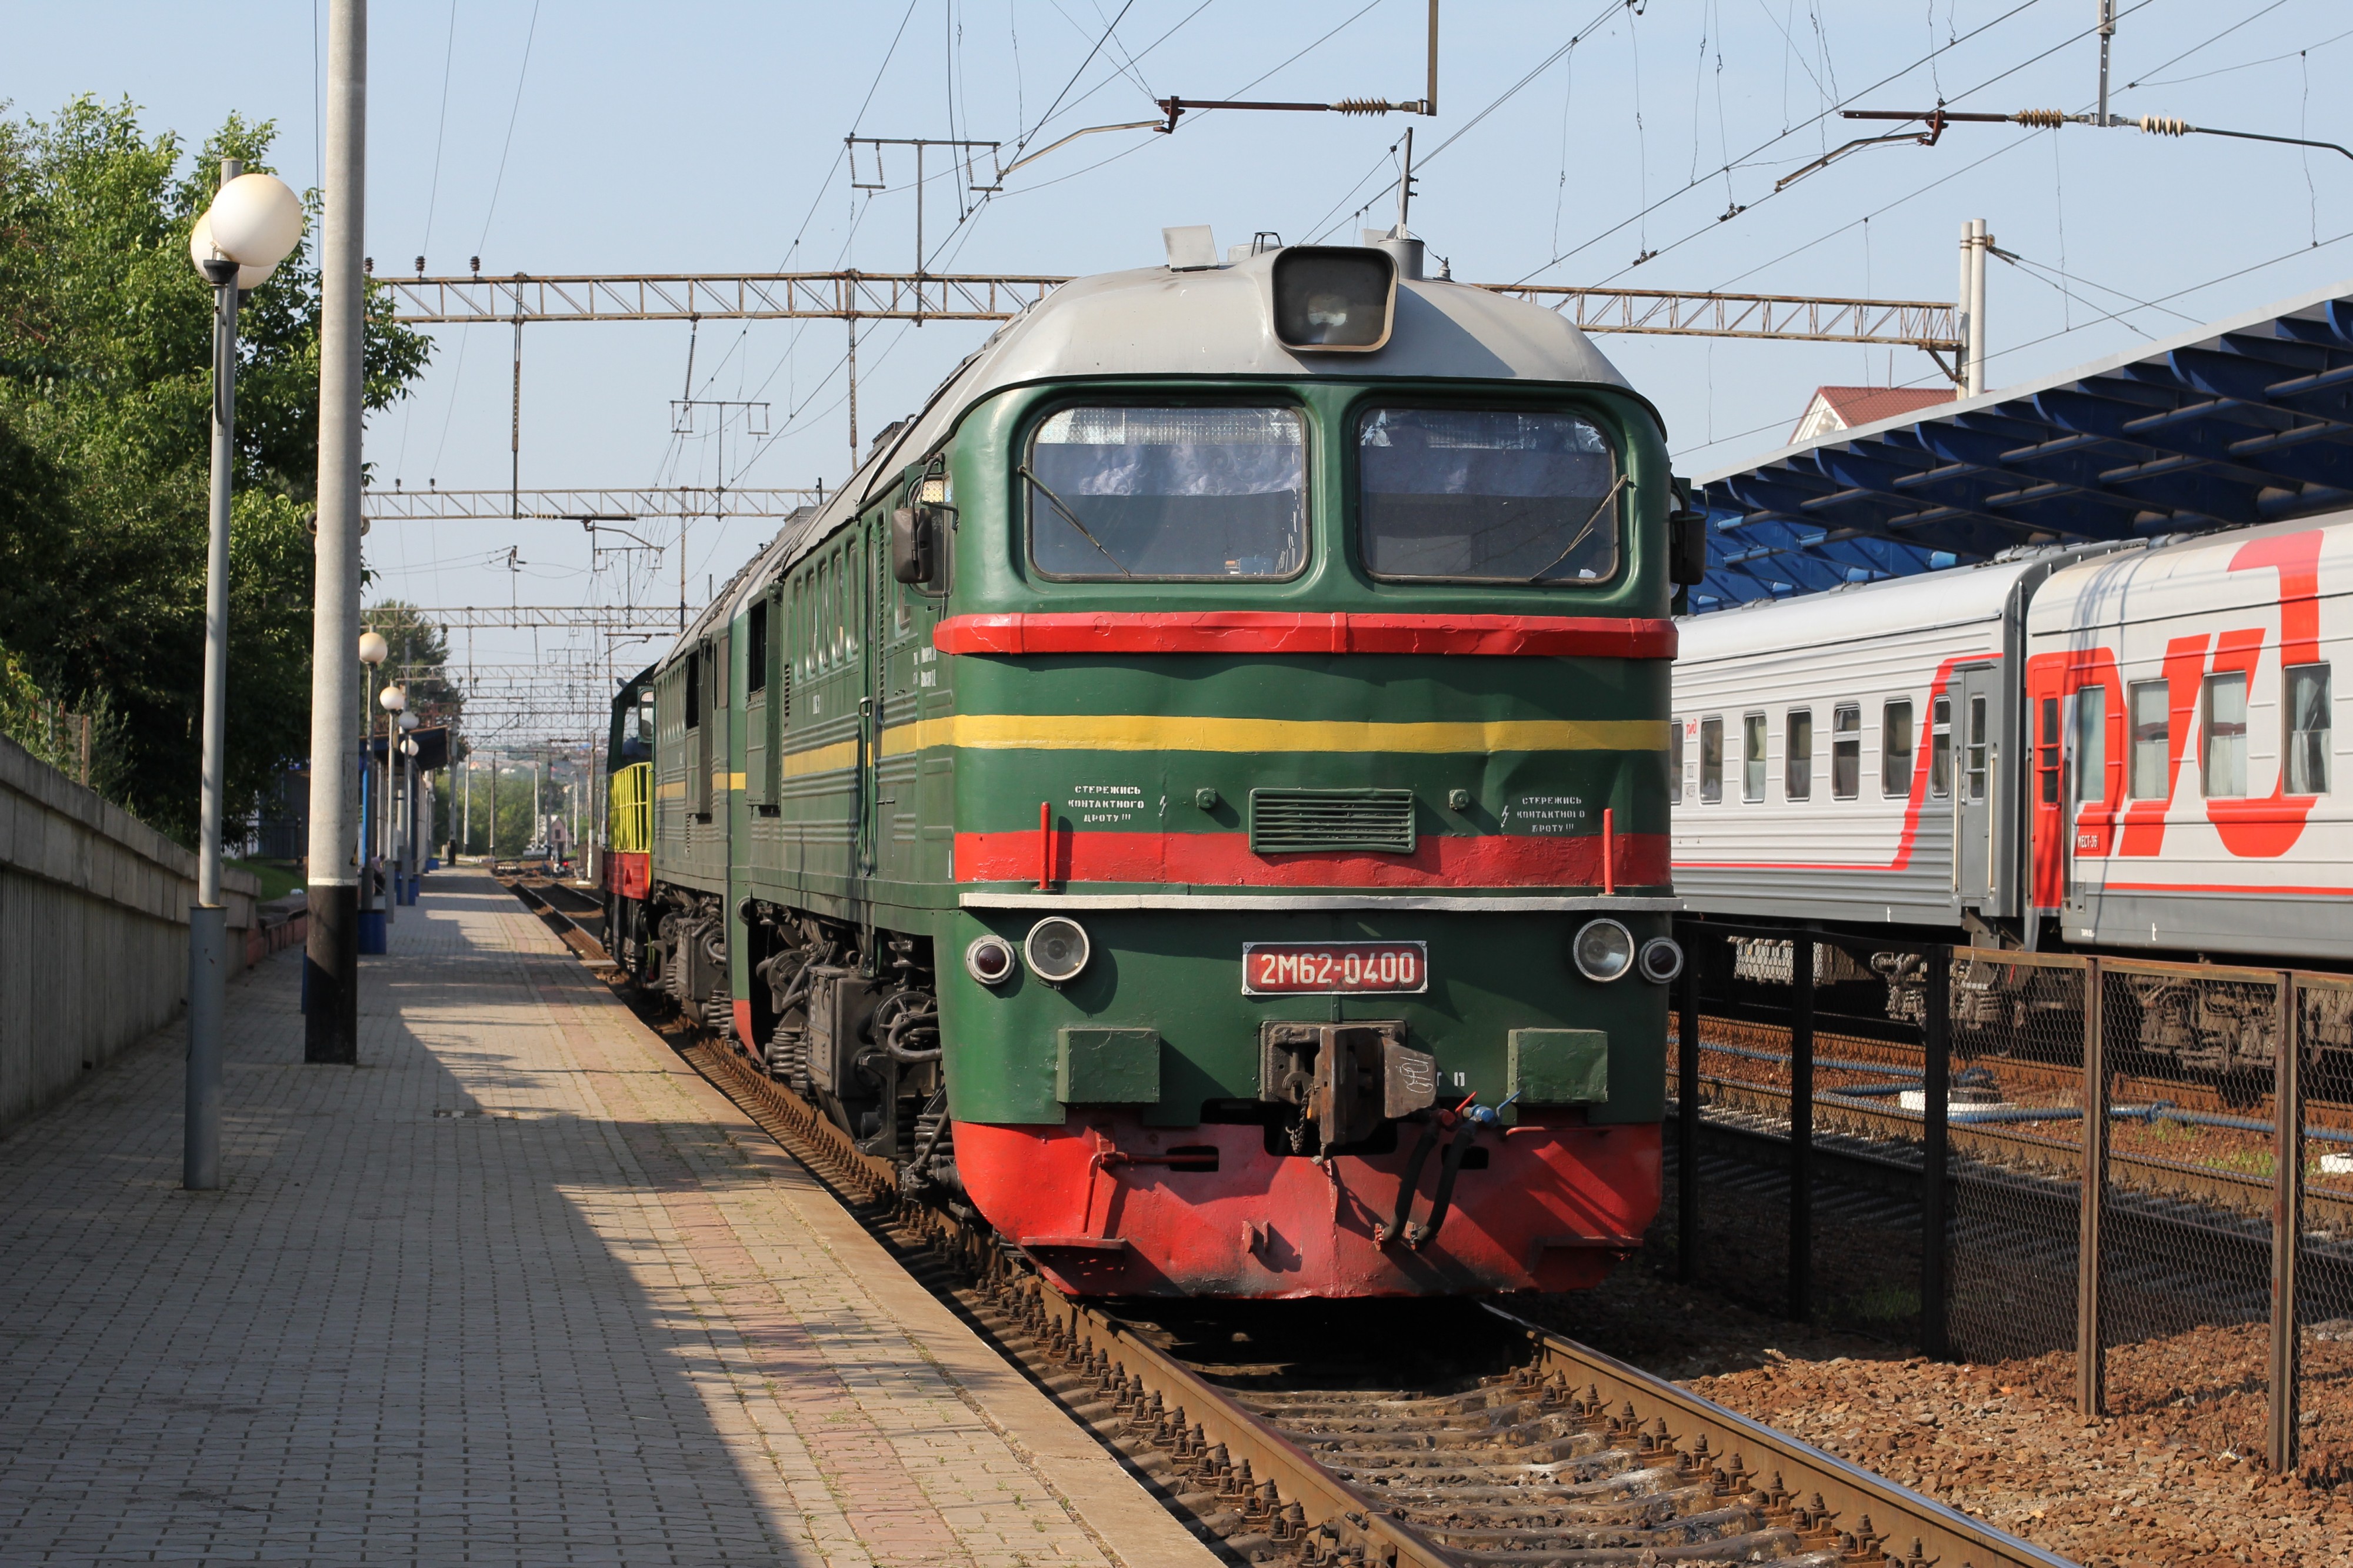 Locomotive 2M62-0400 2012 G2